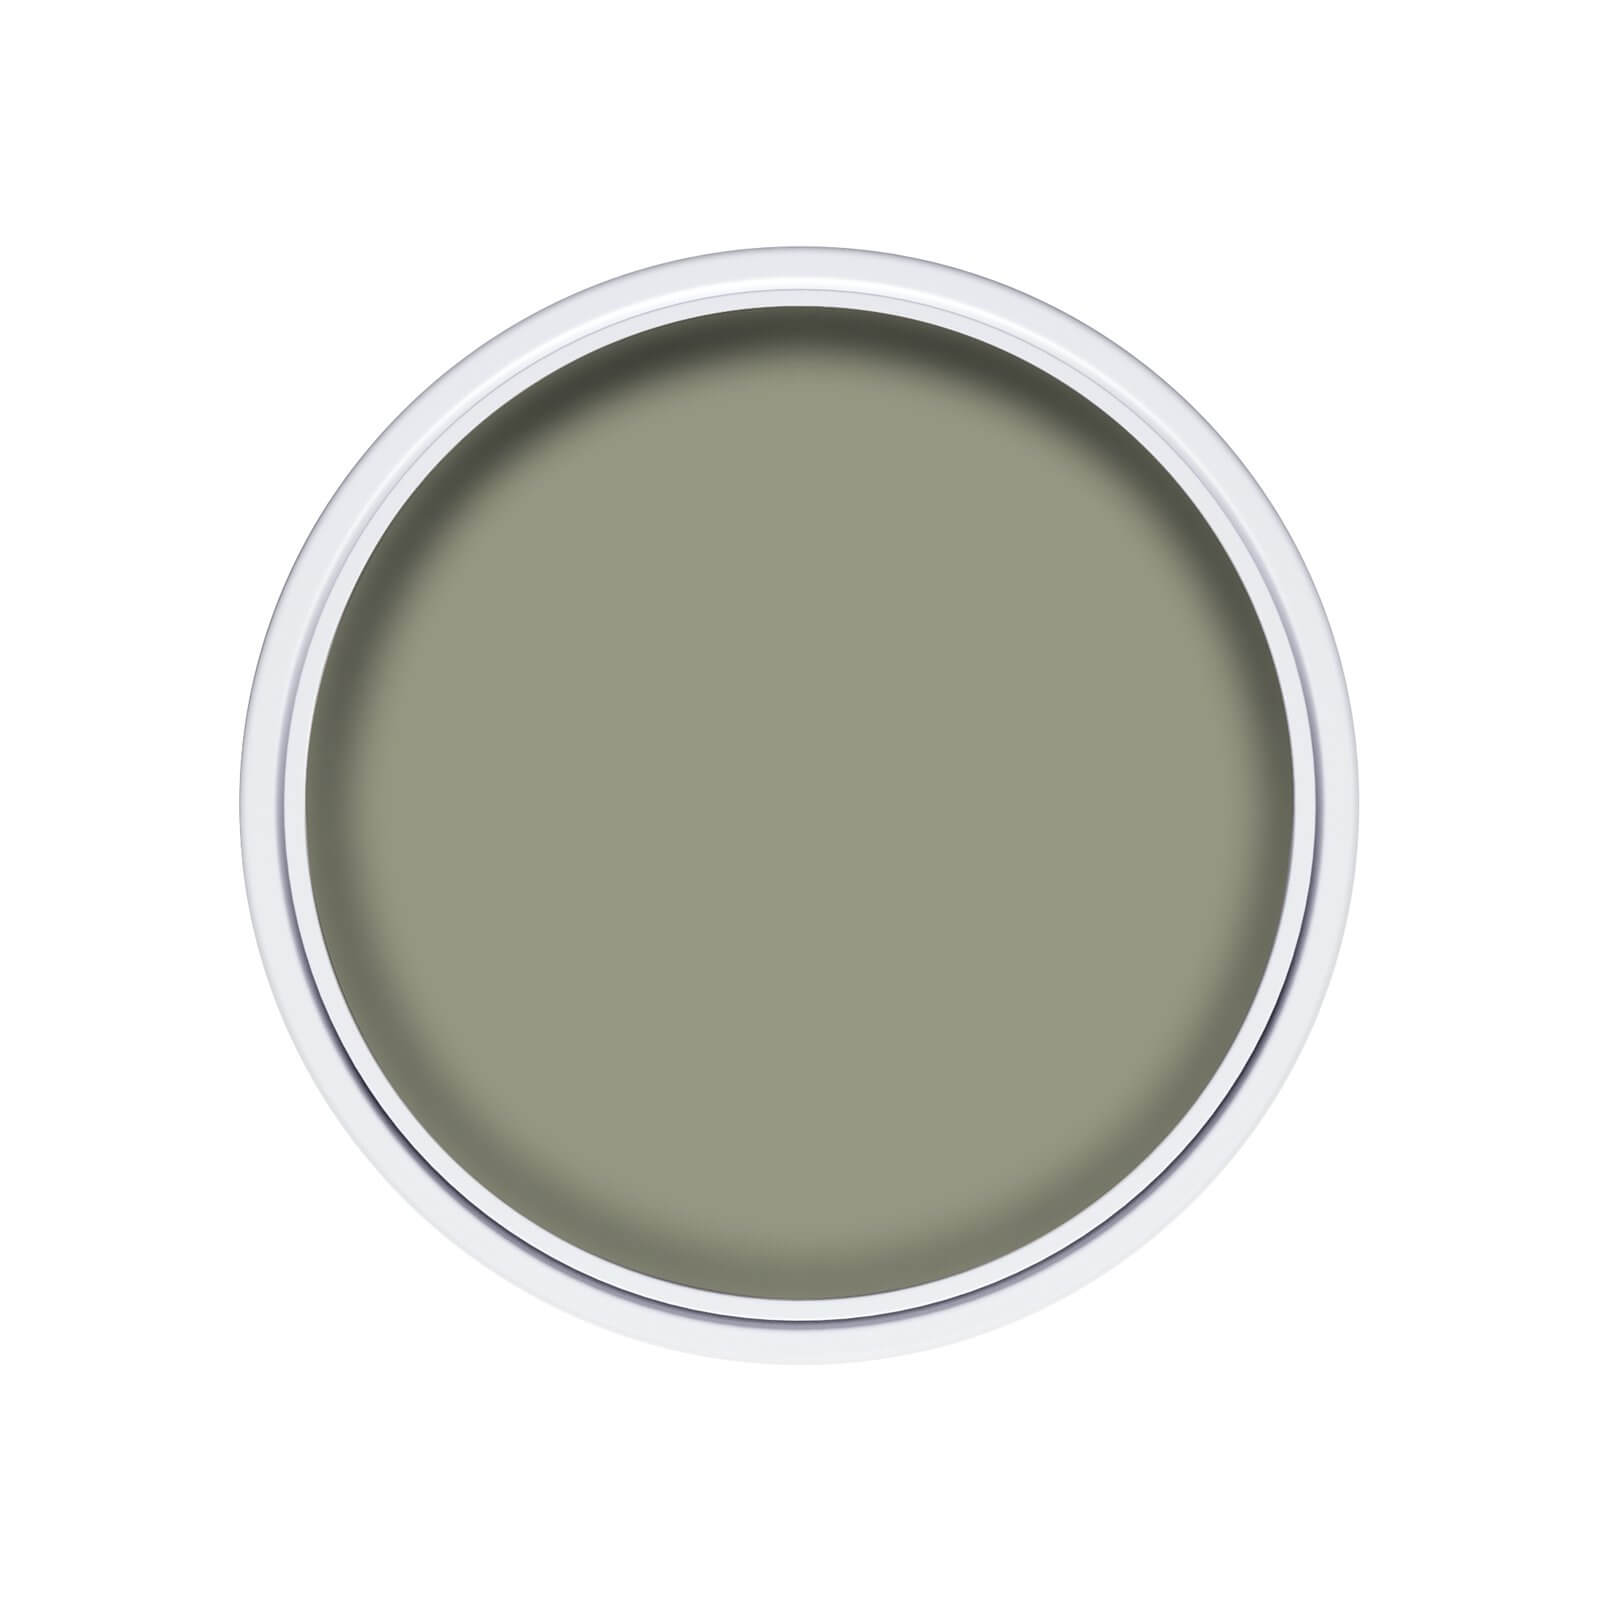 Dulux Weathershield Multi Surface Paint Green Glade - 750ml